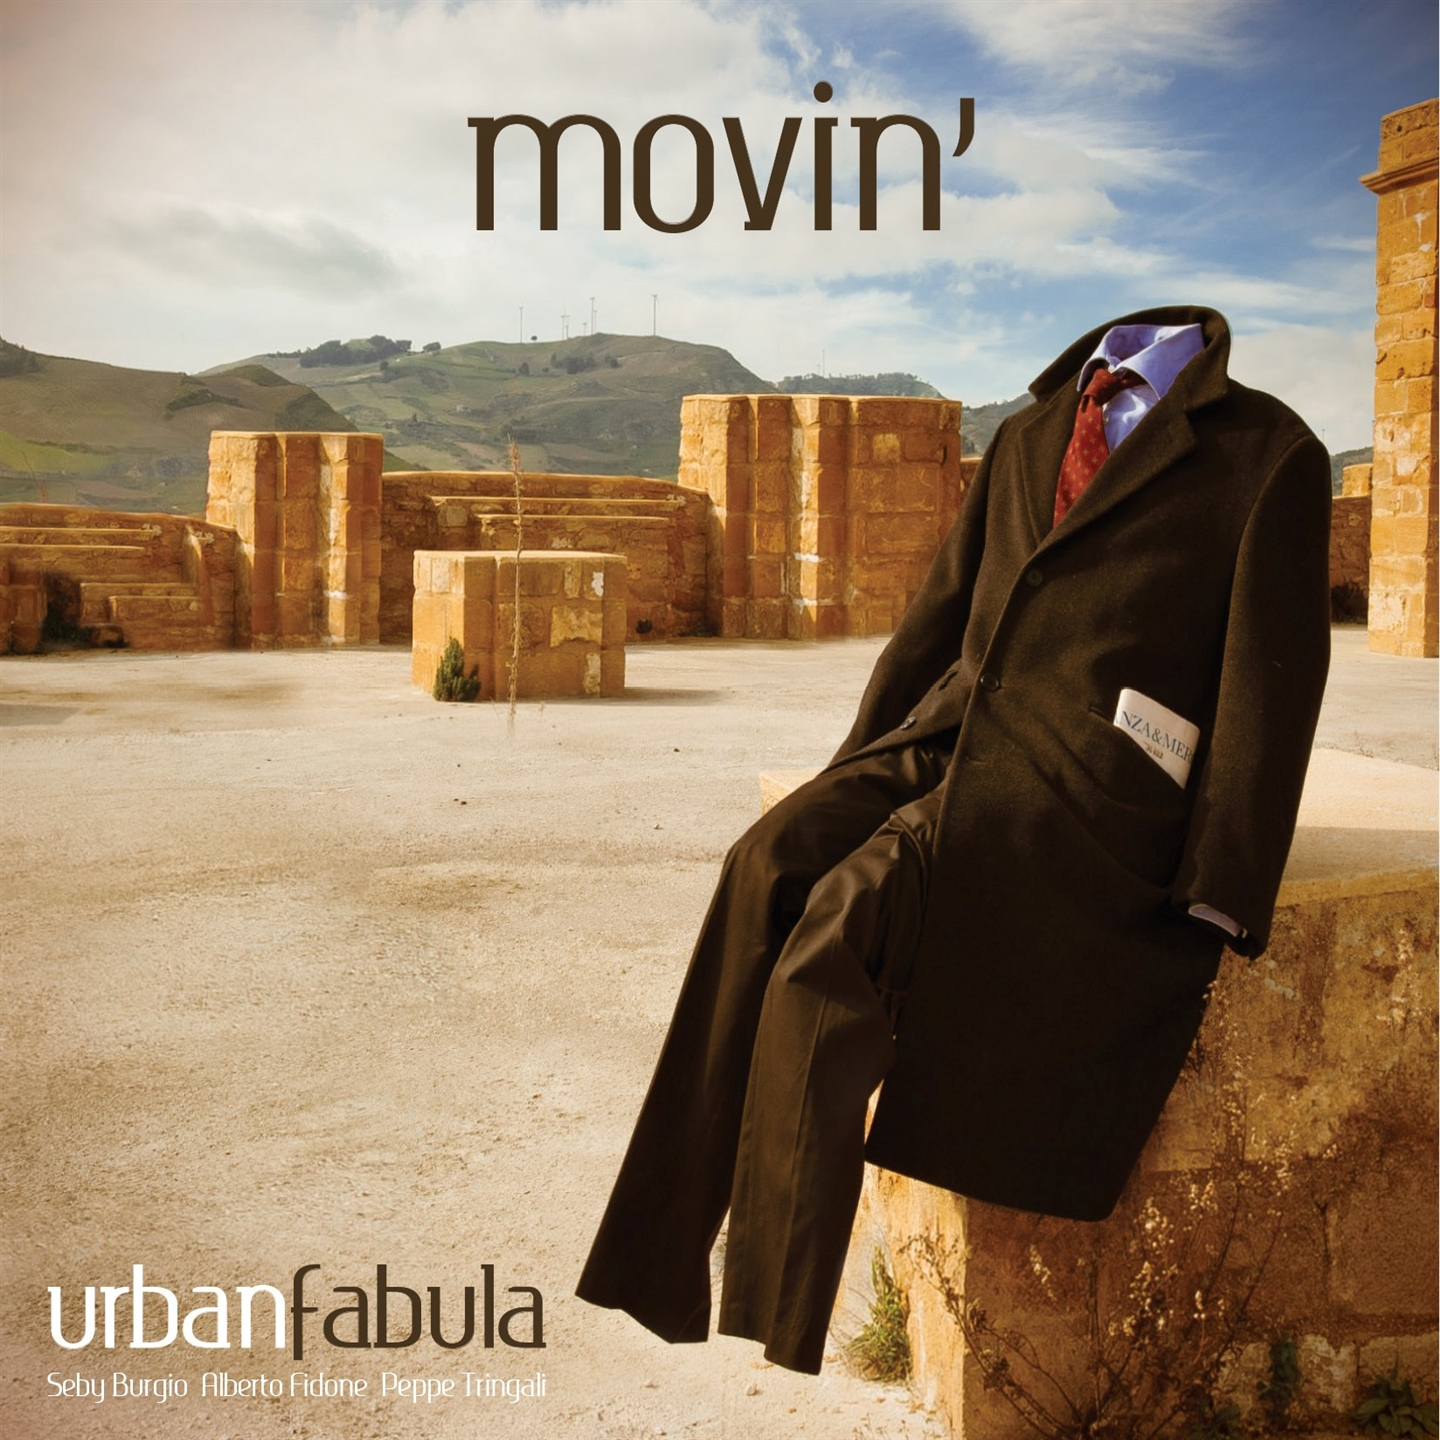 Urban Fabula - Movin' - Bild 1 von 1